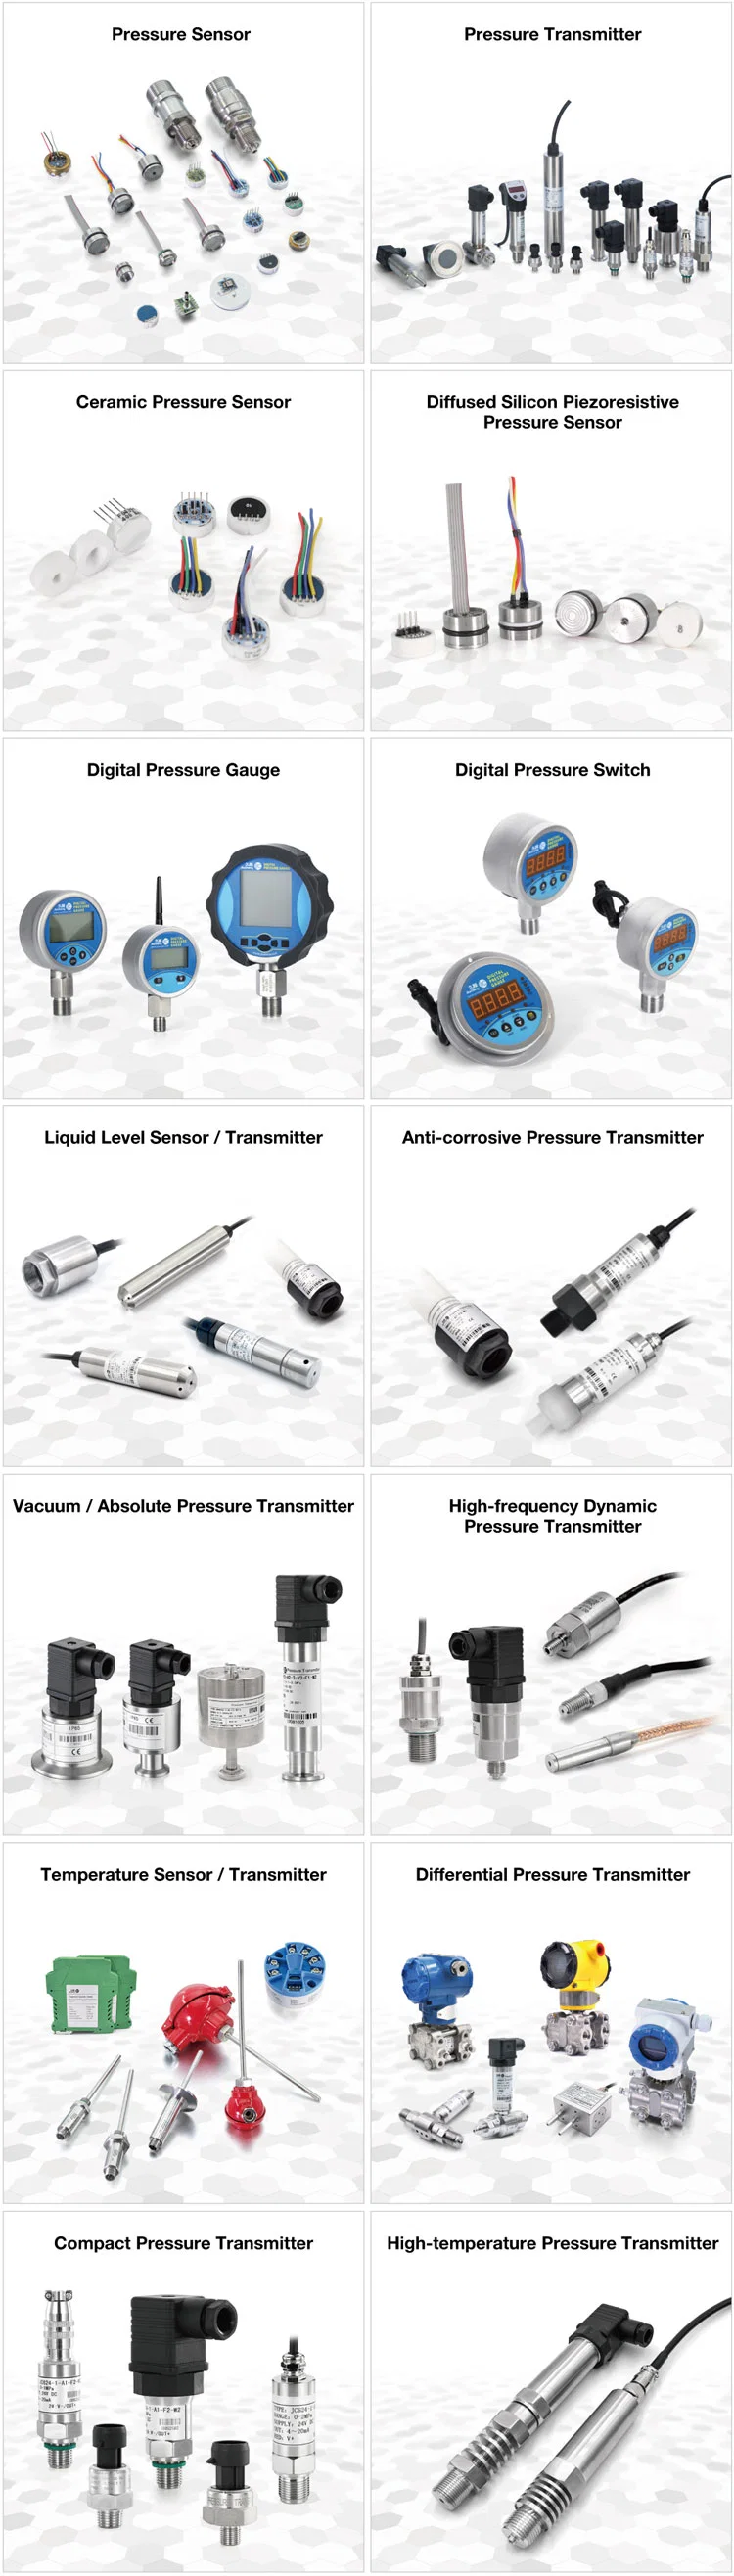 Jc Series Ceramic Pressure Sensor / Transducer Custom Manufacturer